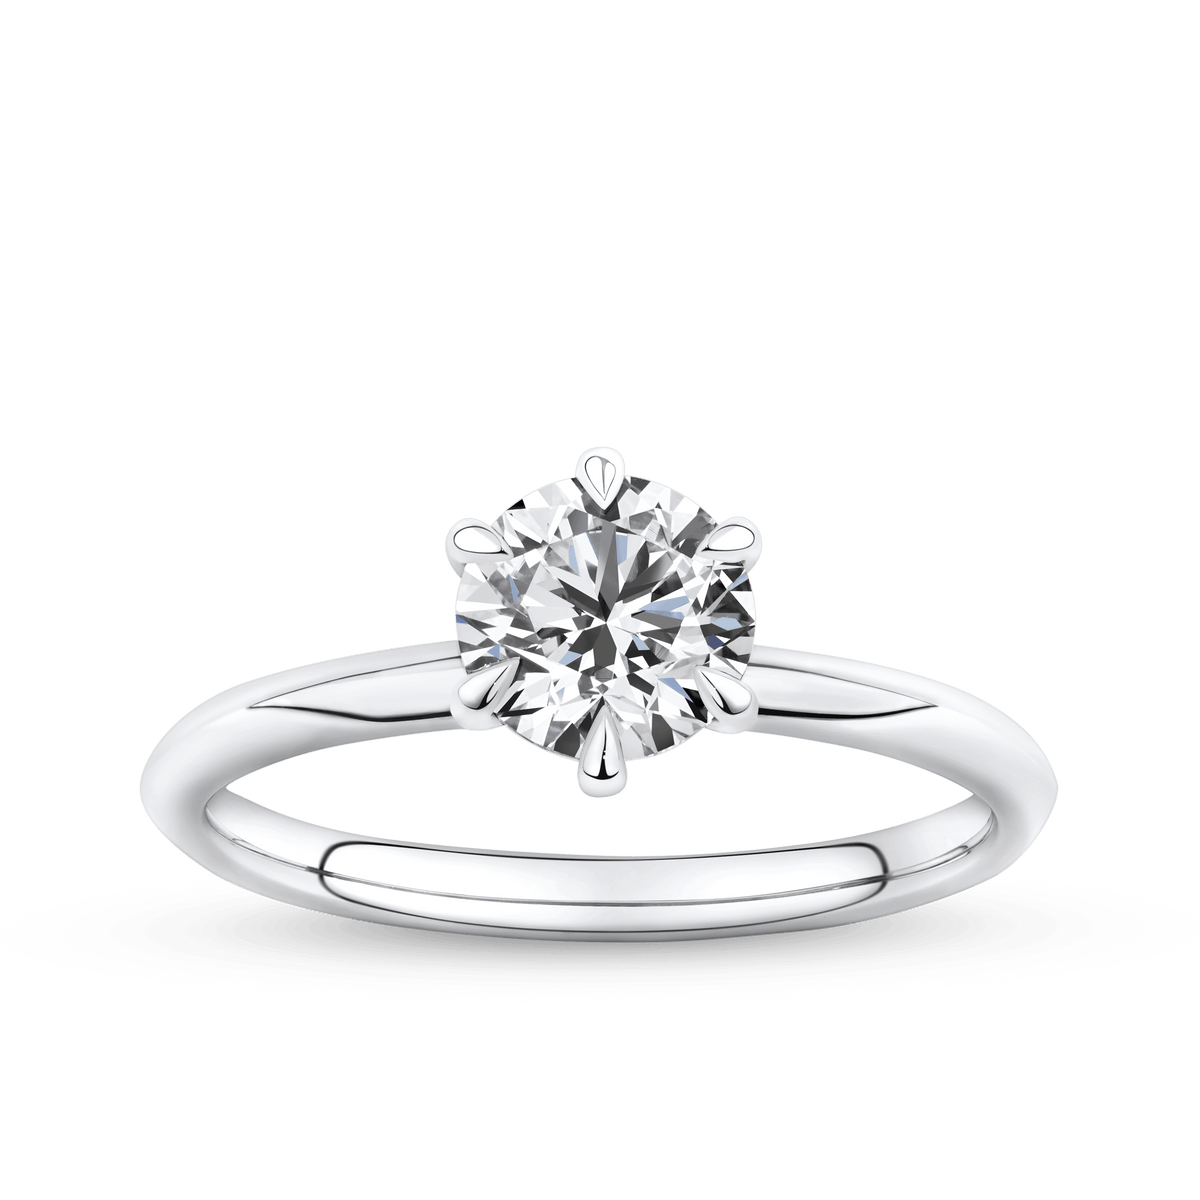 Amāre 1.00 Carat TW Diamond Solitaire Engagement Ring set in Platinum - Wallace Bishop